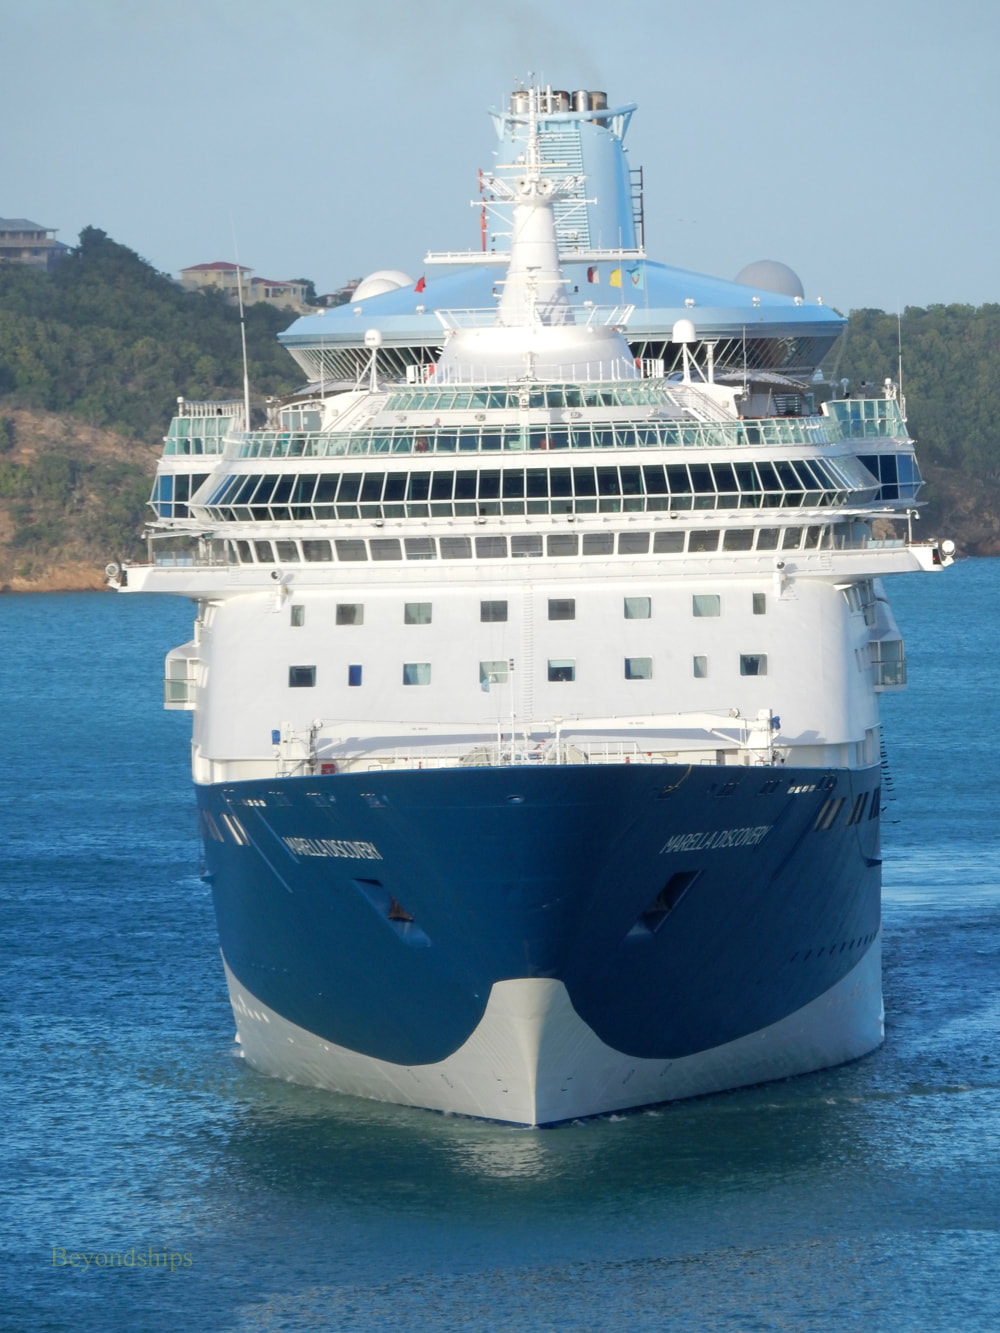 Cruise ship Marella Discovery